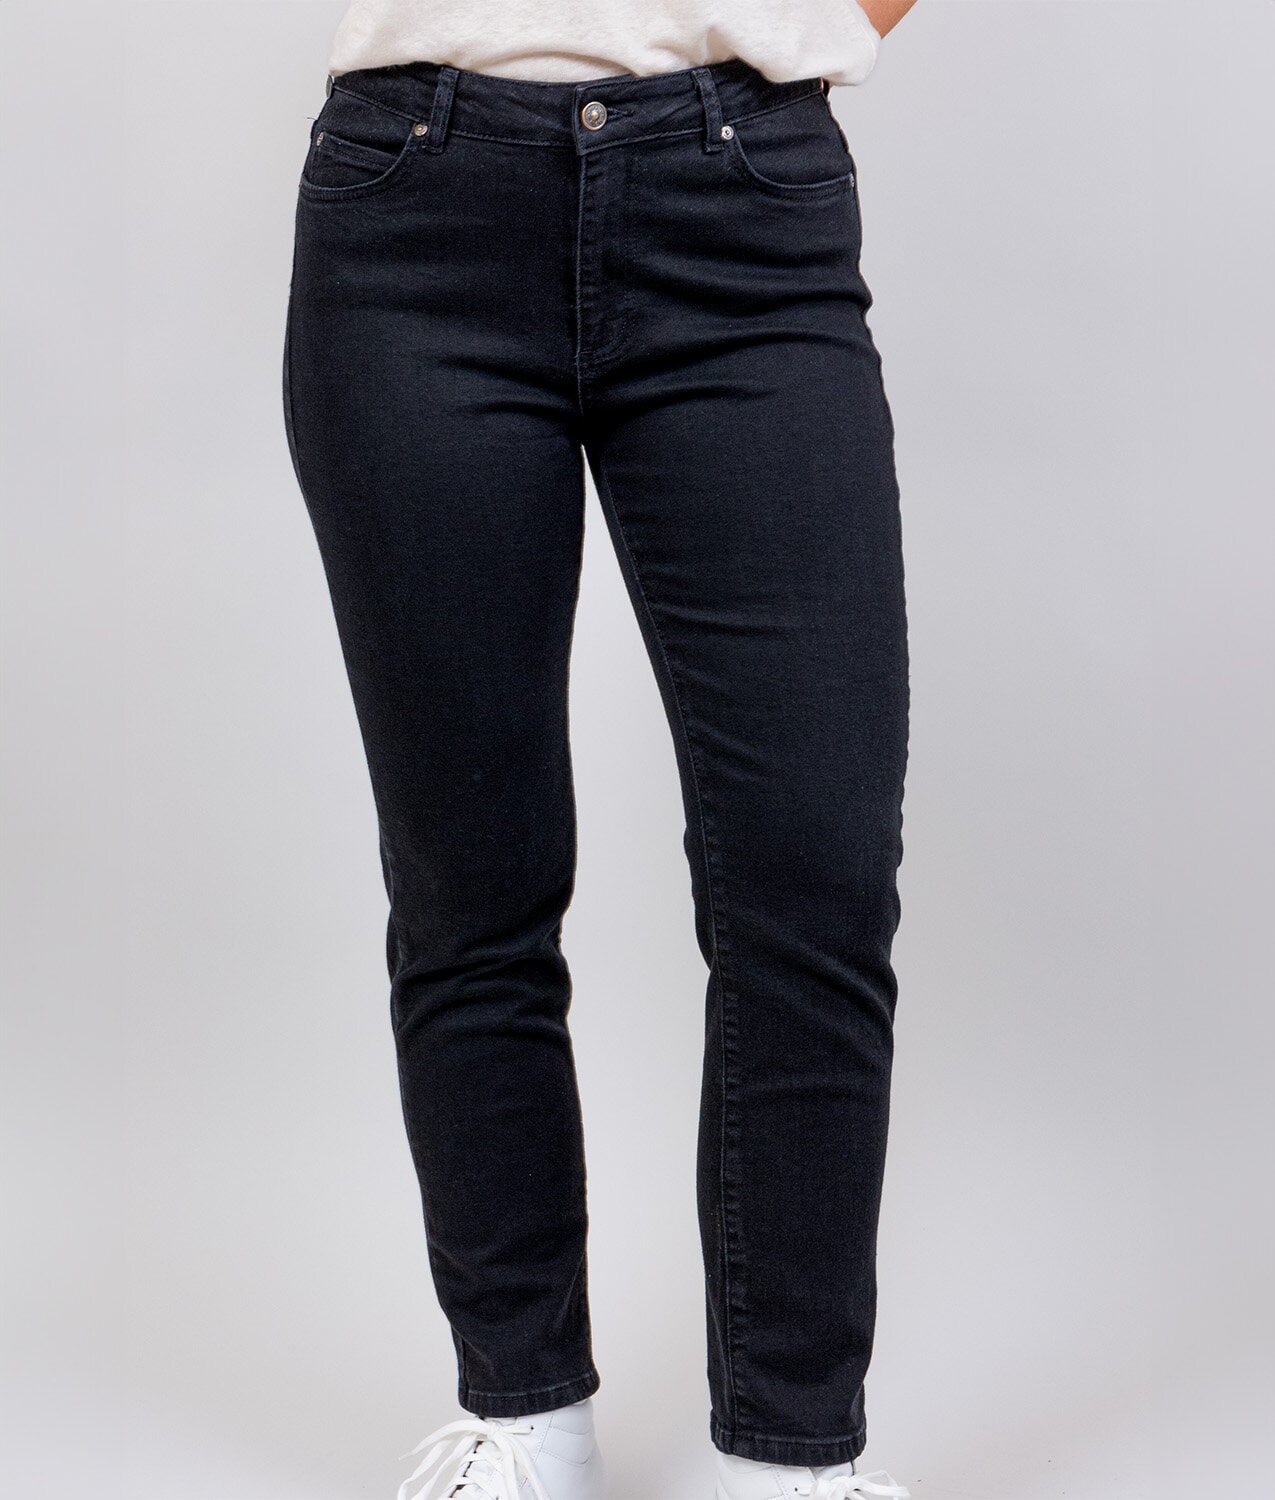 Wood jeans - black